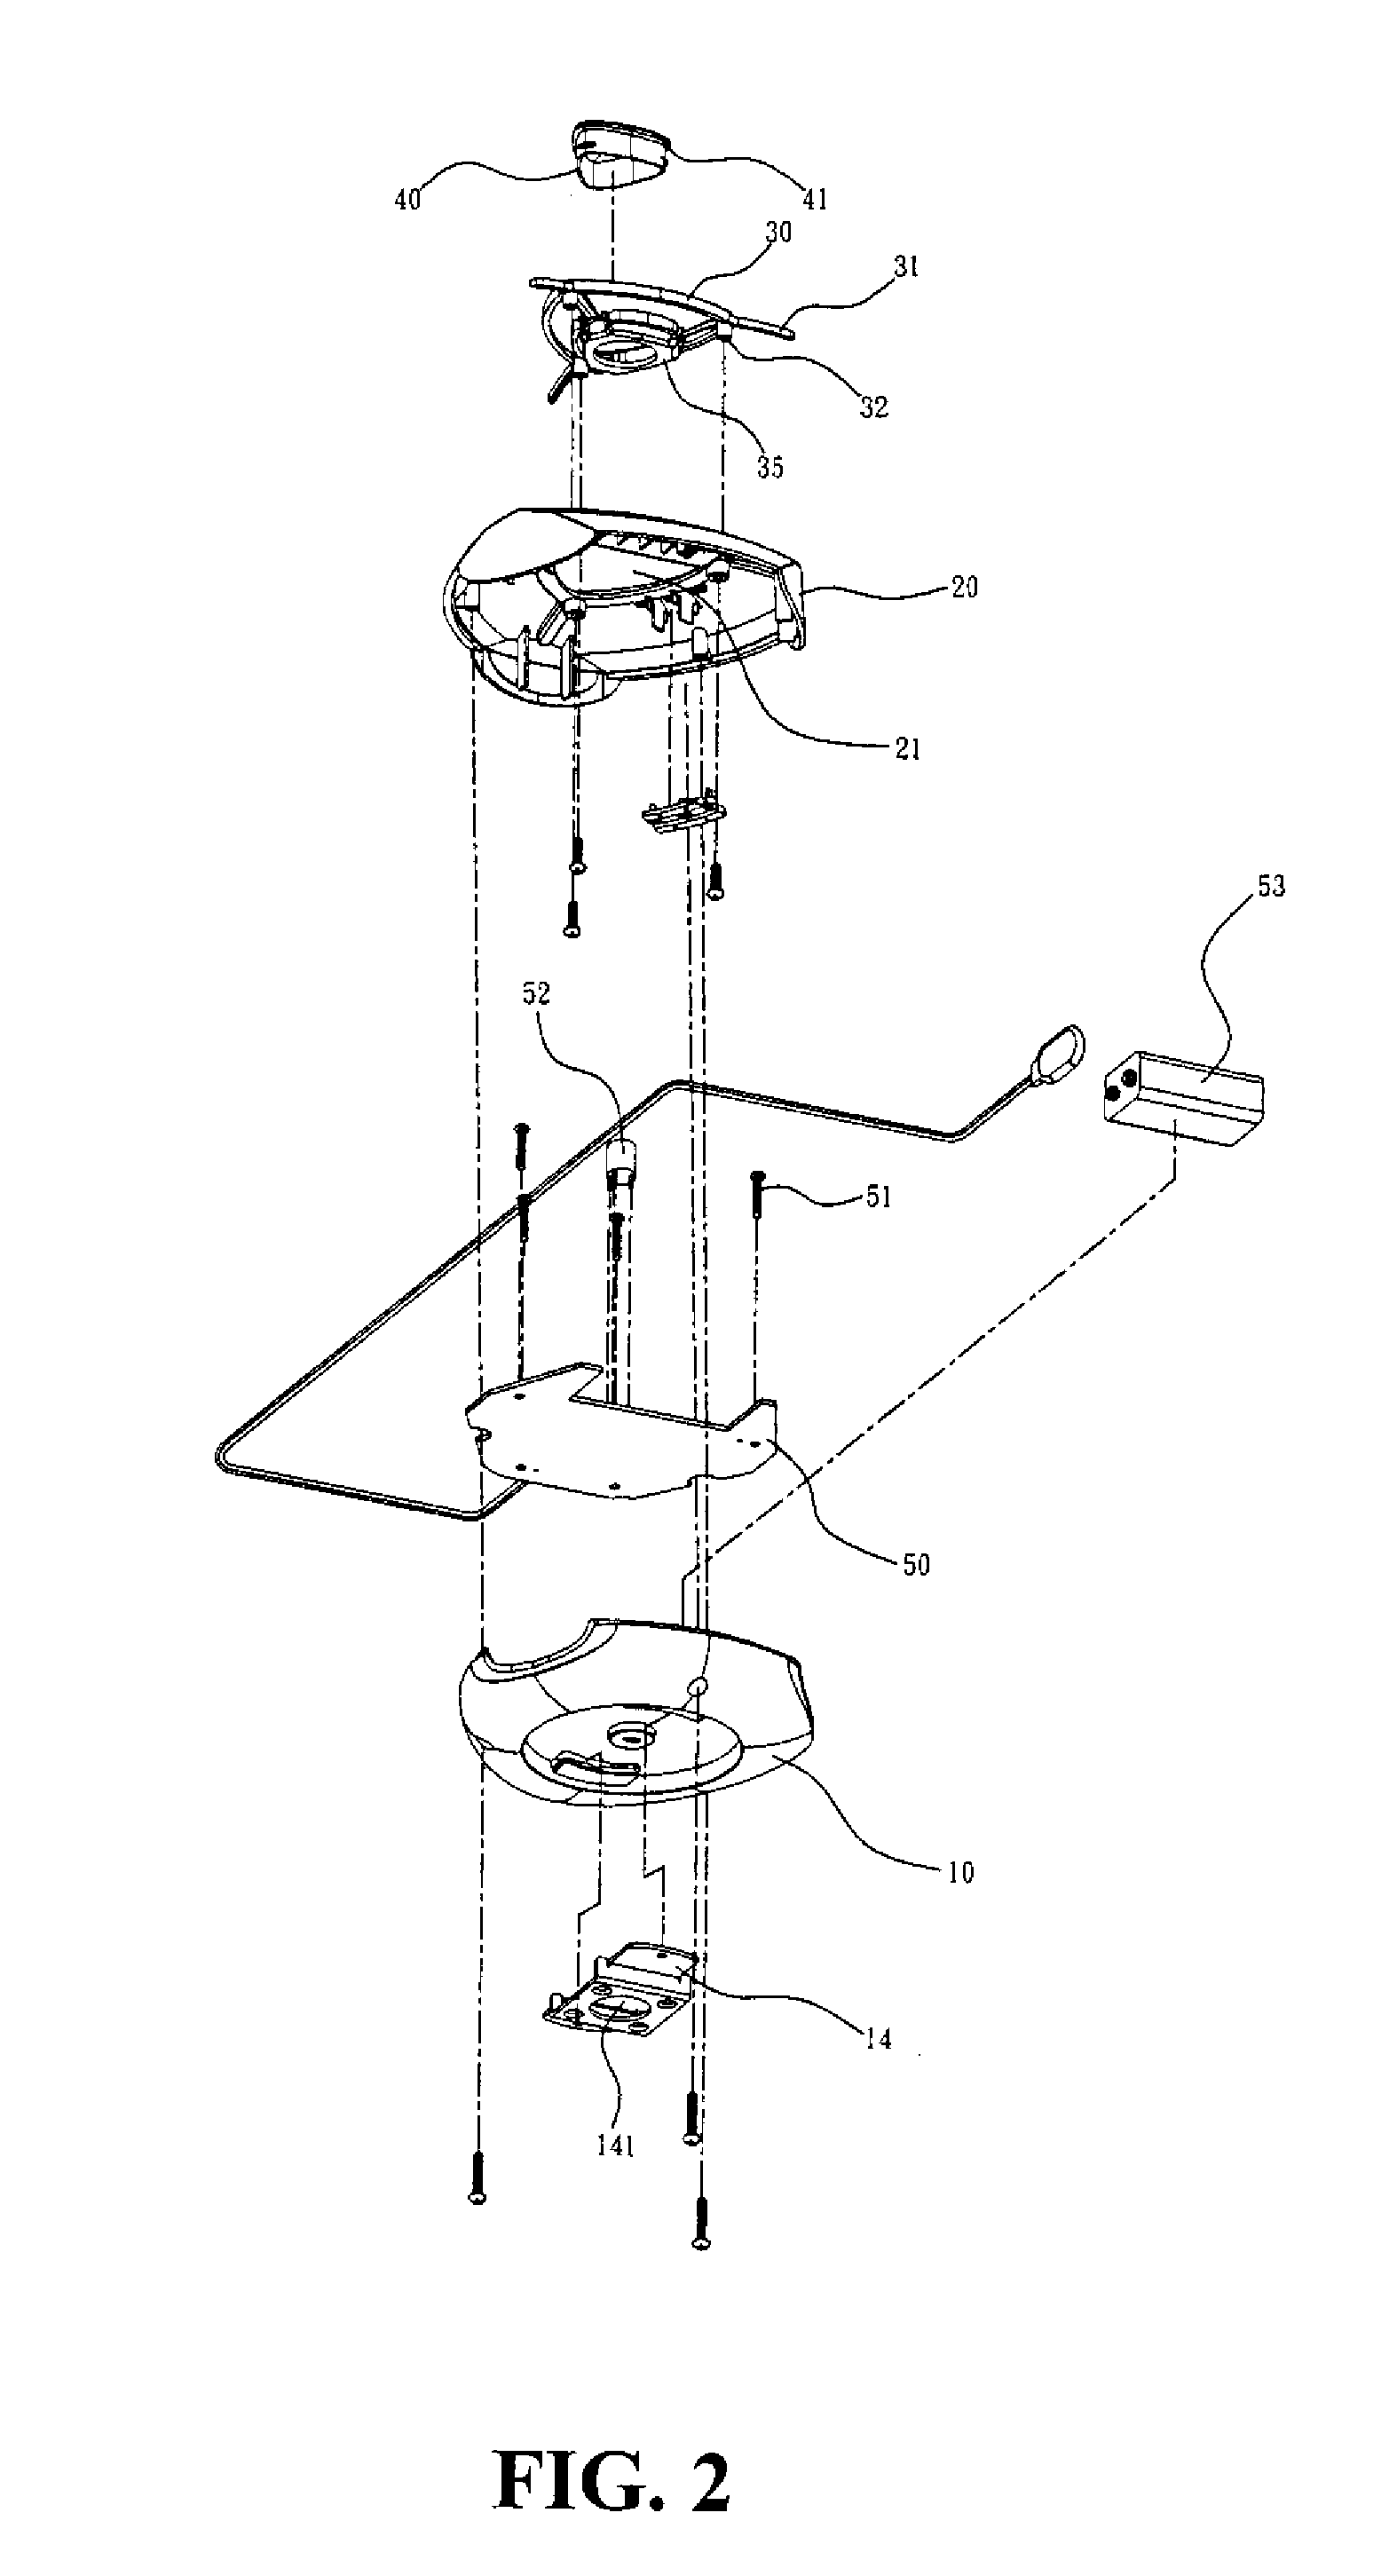 Sensor device structure